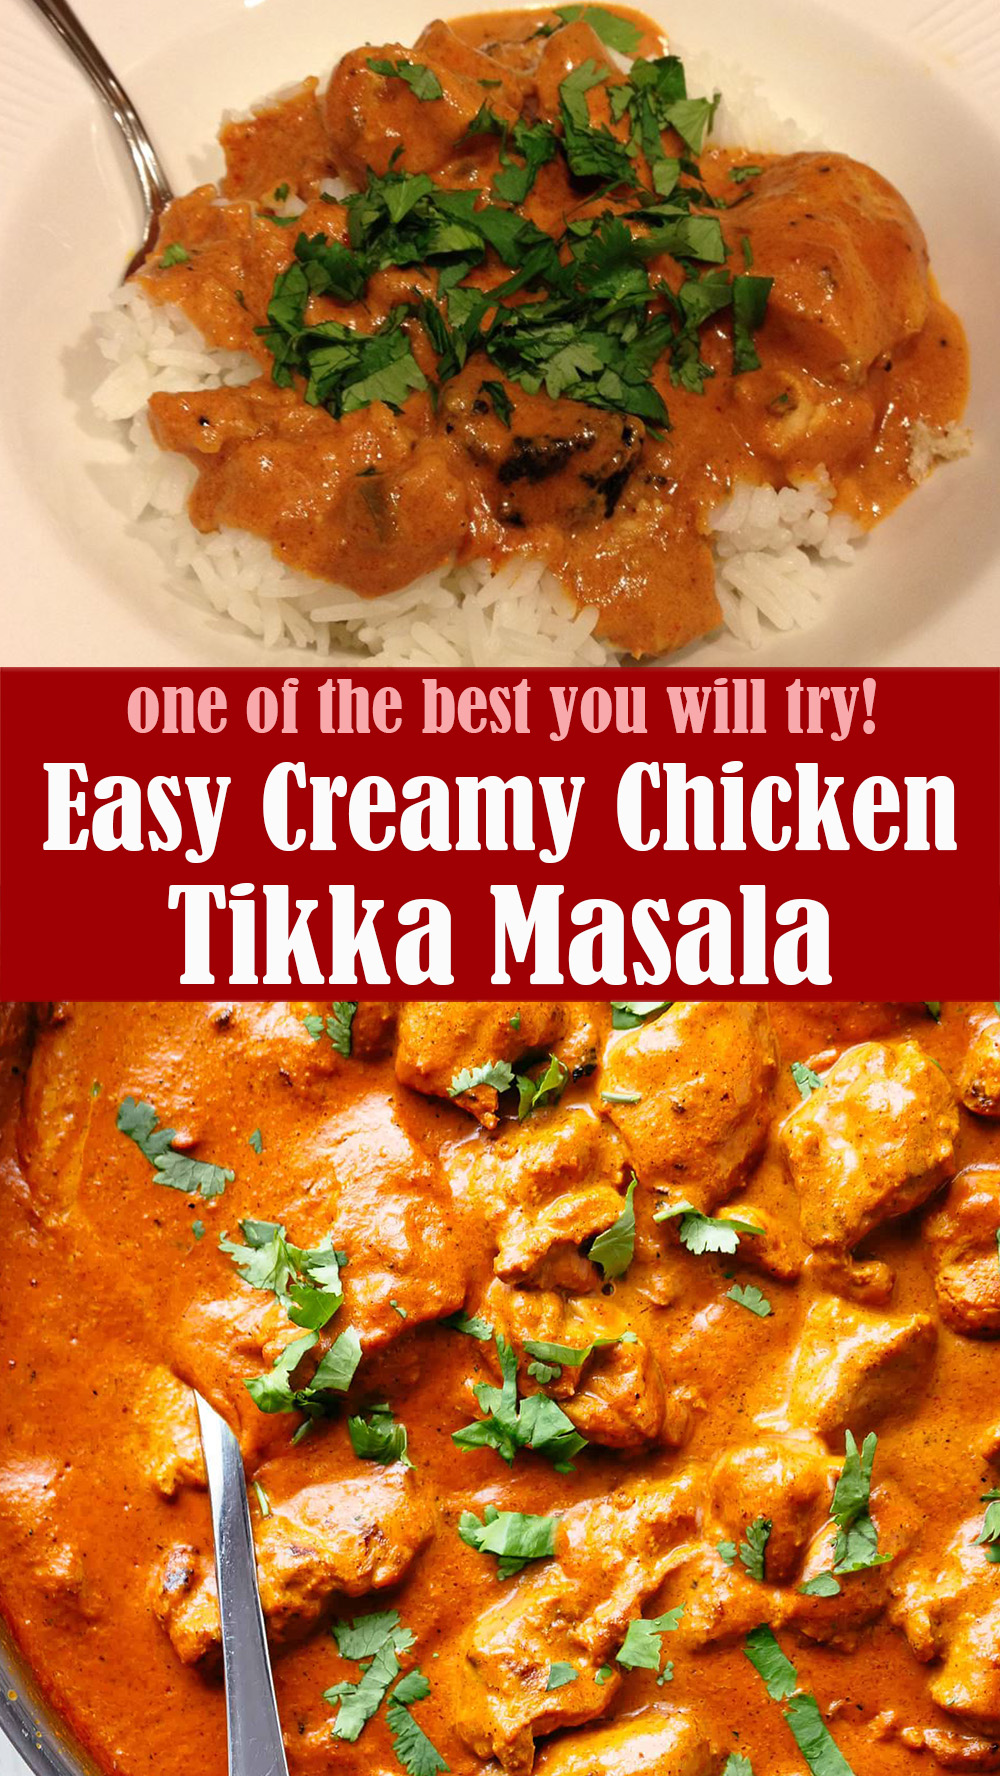 Easy Creamy Chicken Tikka Masala